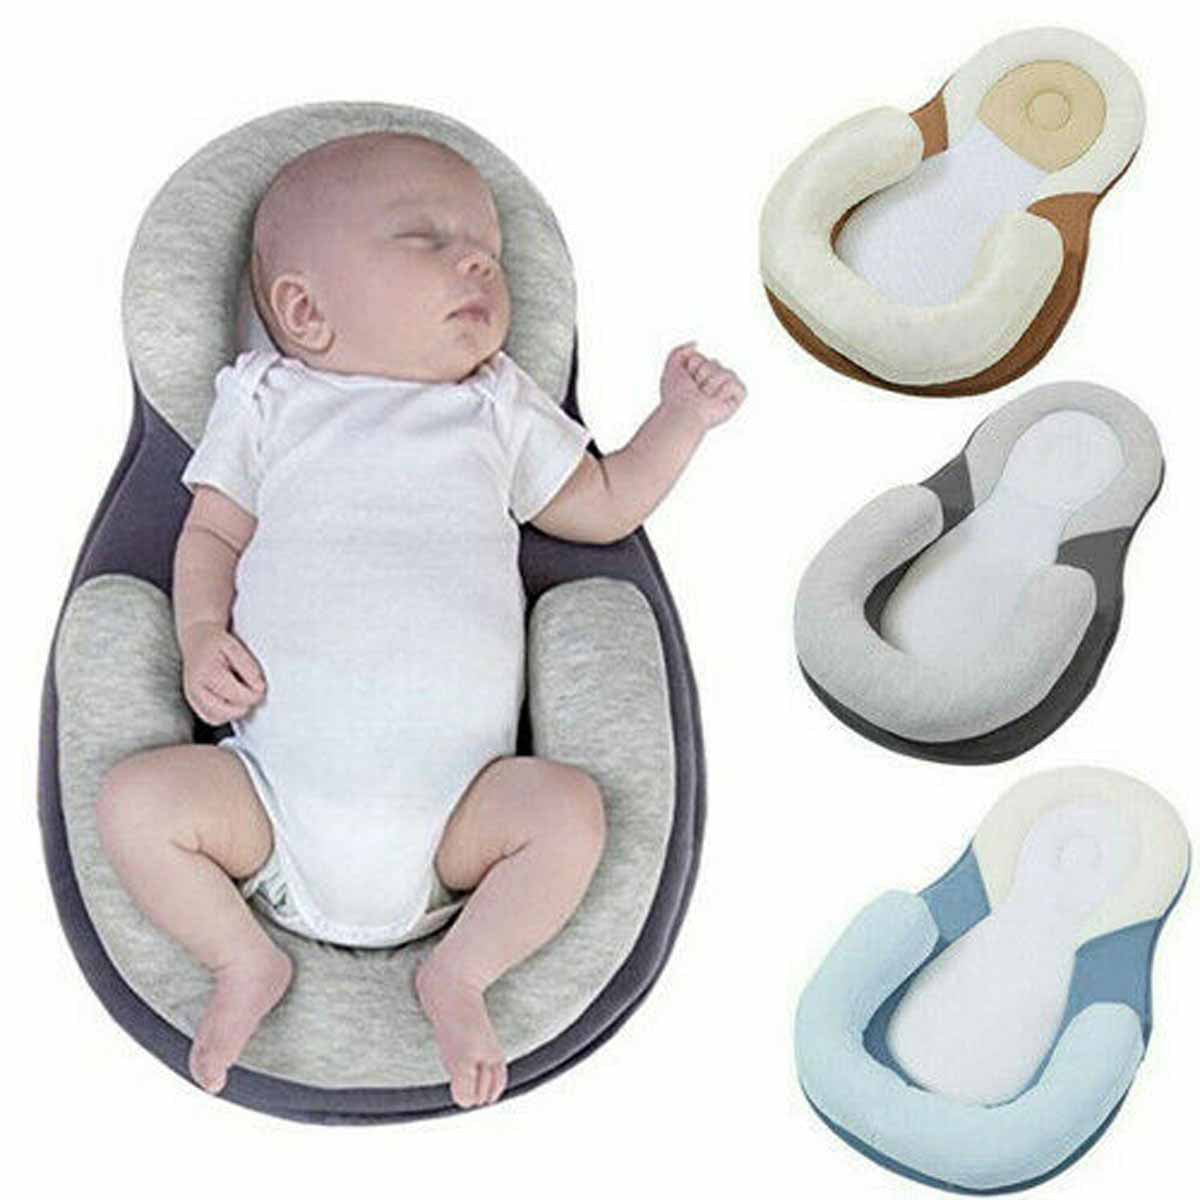 Soft Newborn Baby Pillow Infant Cushion 